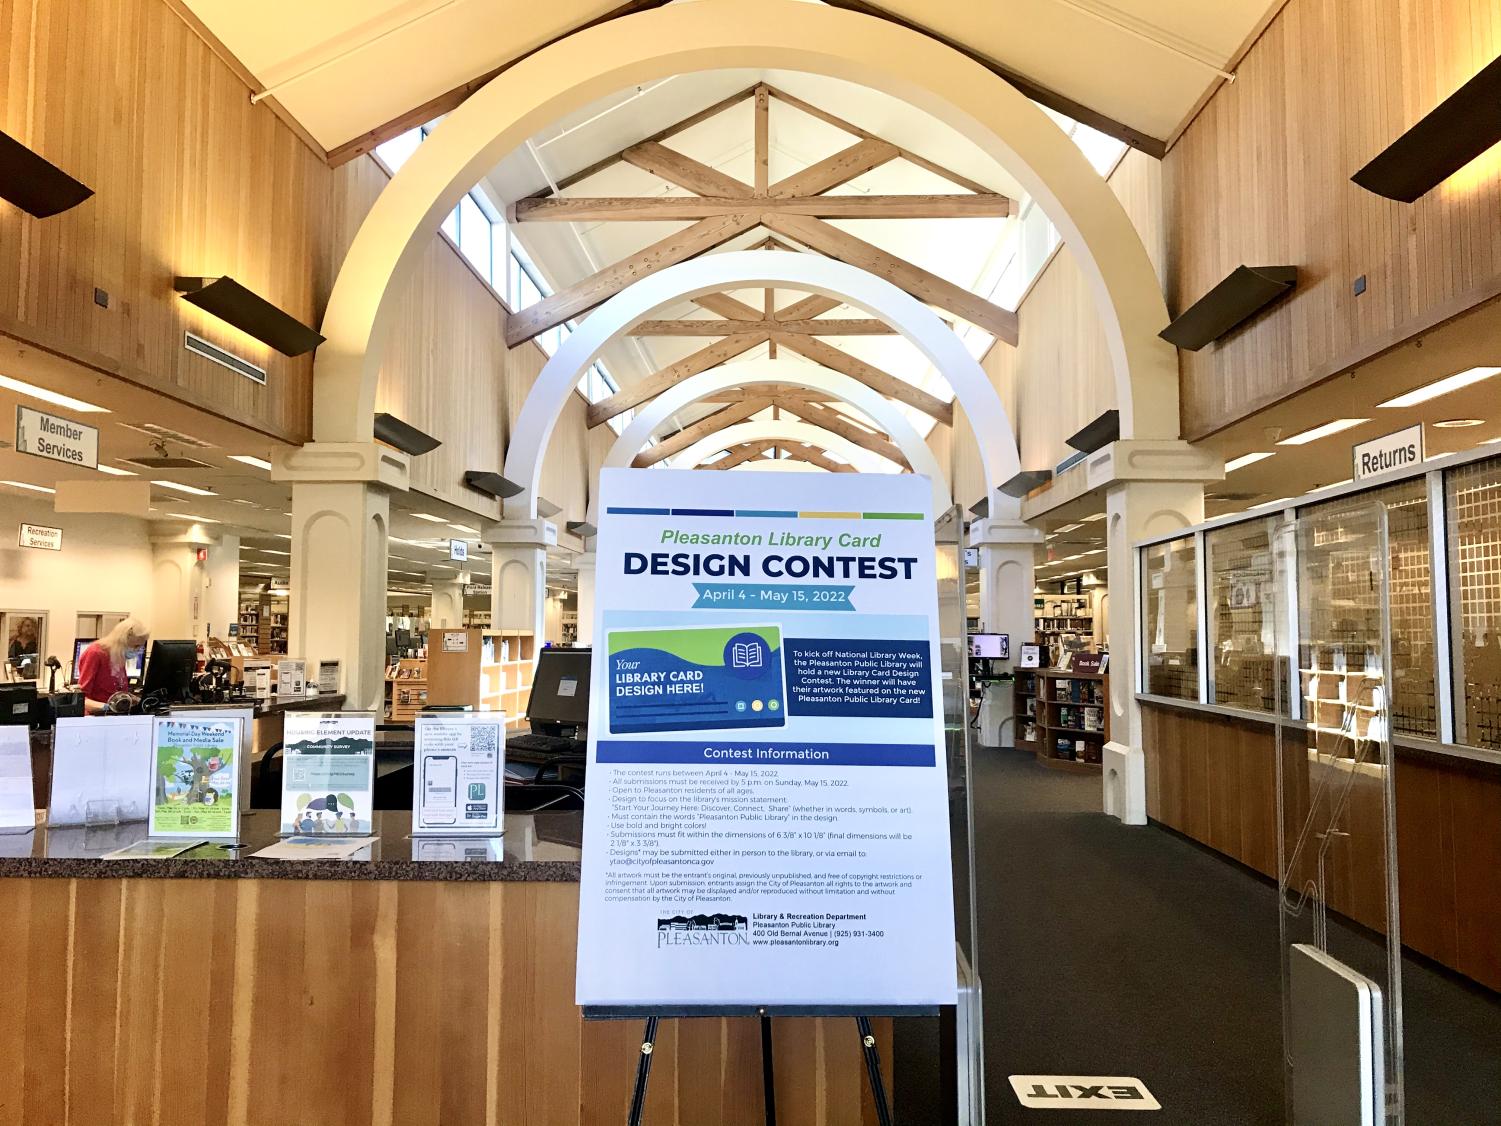 Pleasanton+public+librarys+card+design+contest+promotes+community